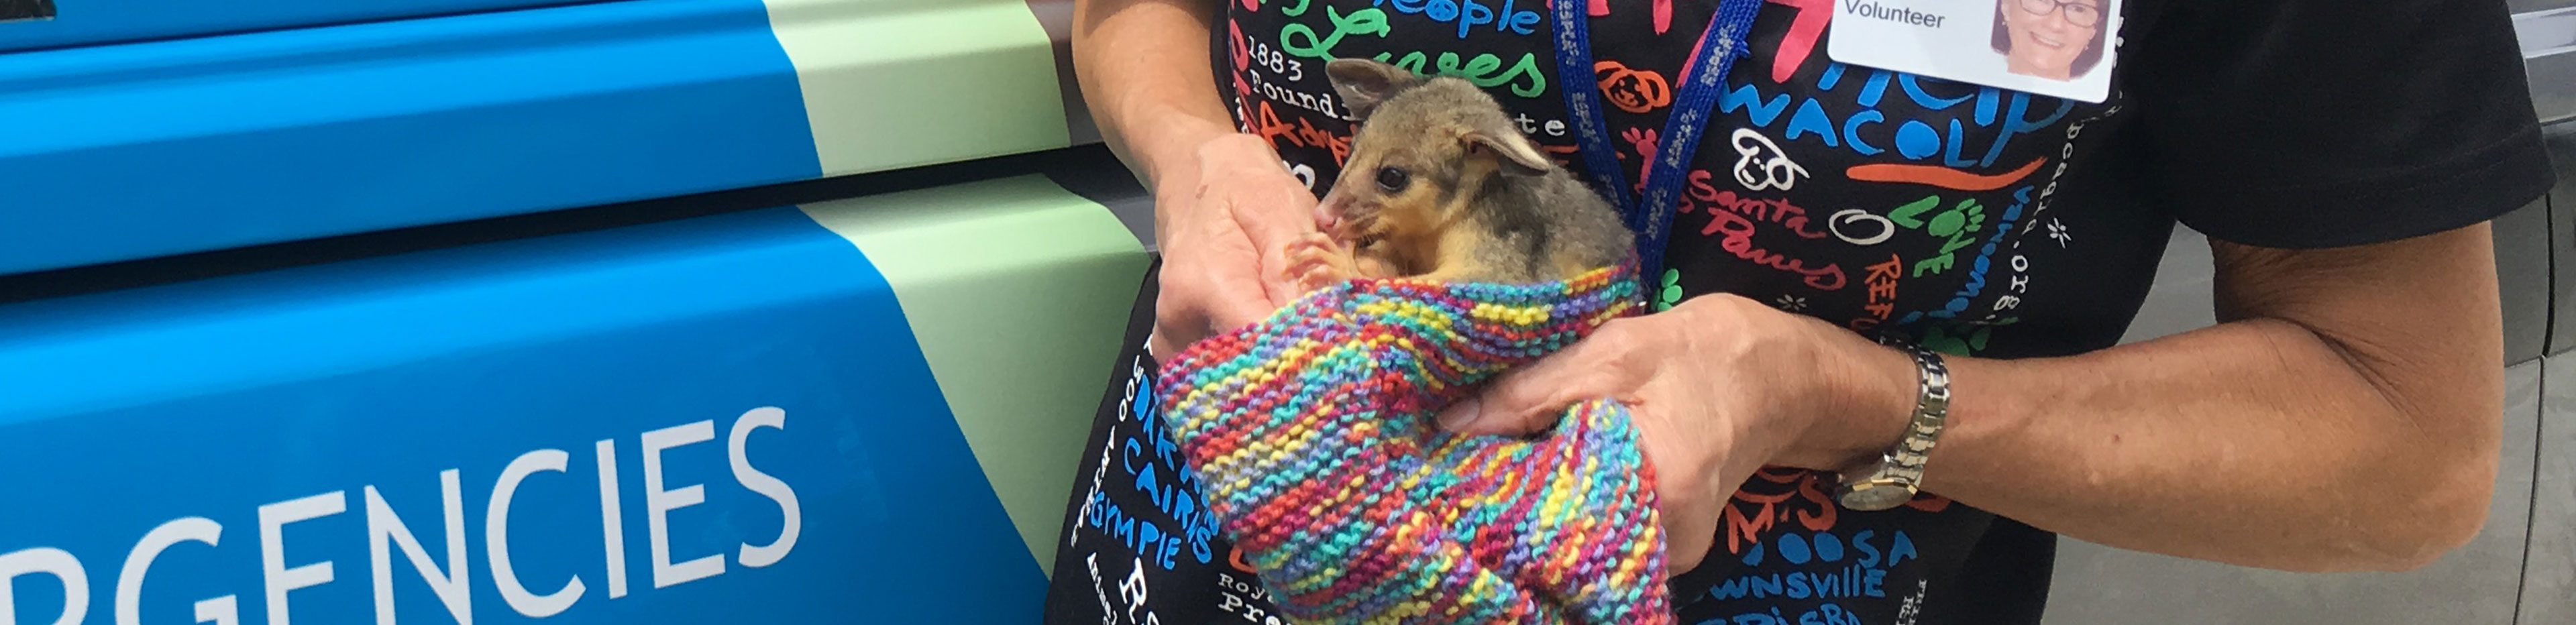 RSPCA animal ambulance driver holding baby possum